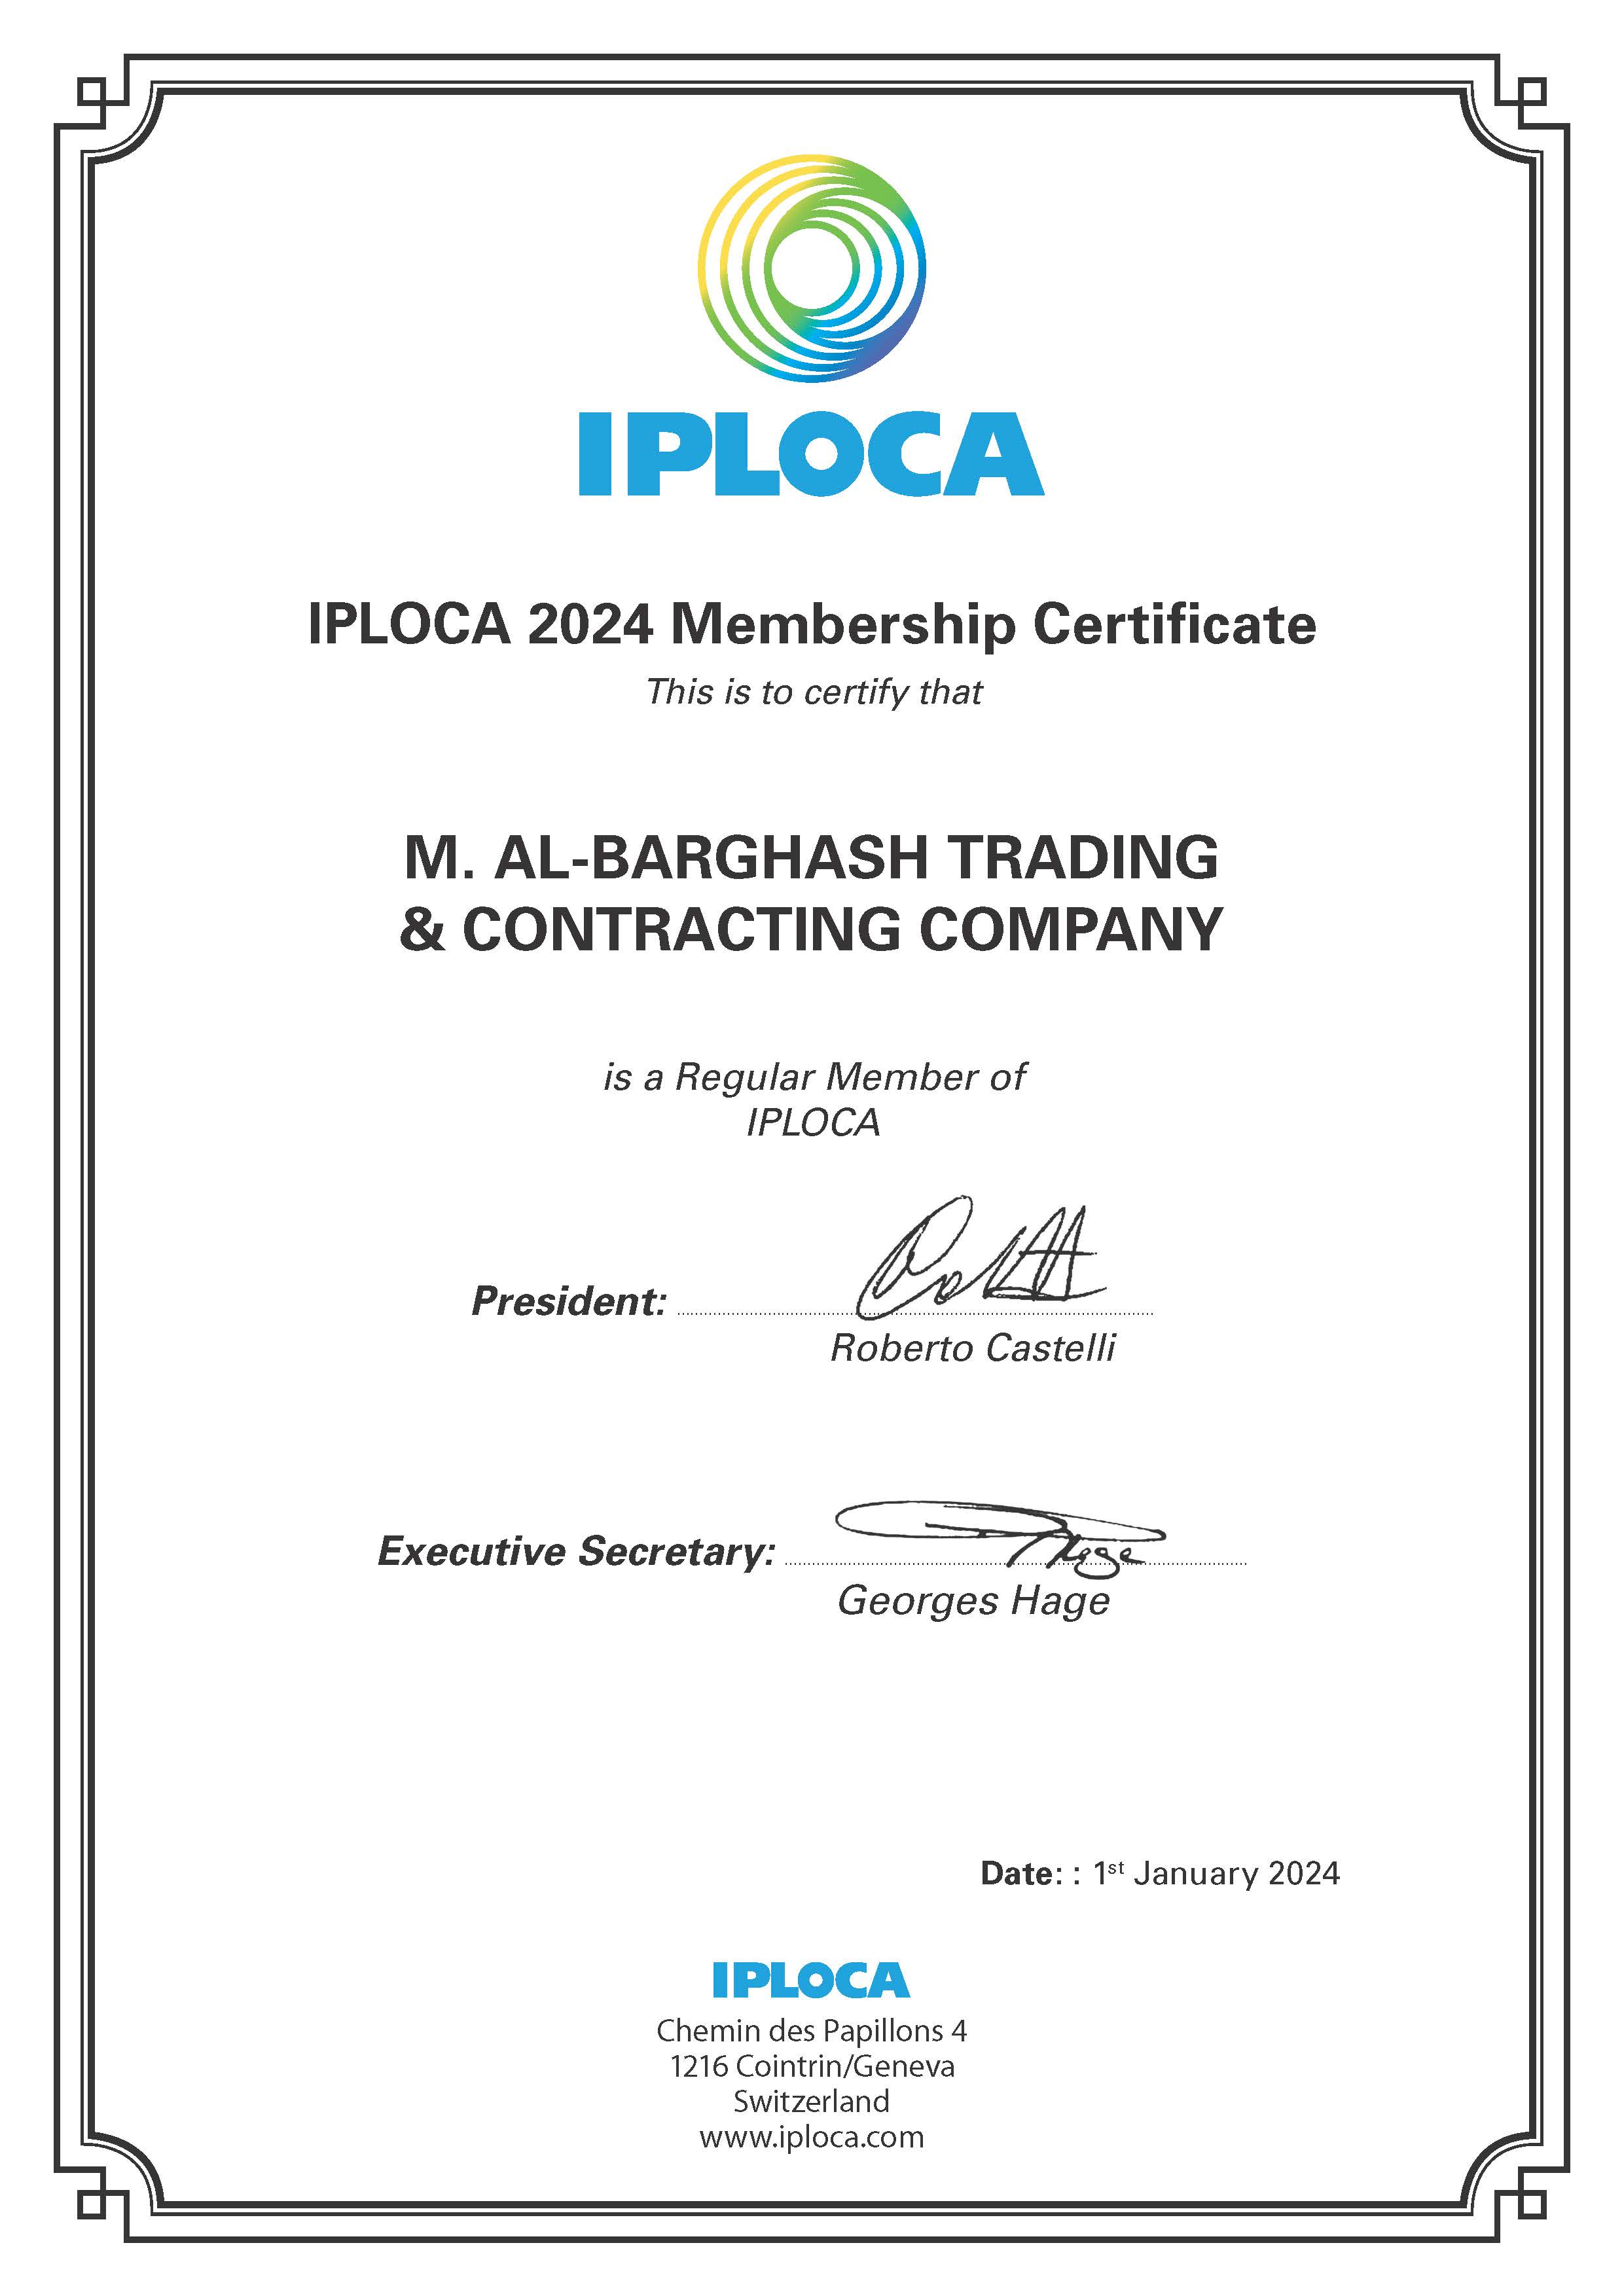 Successful achievement. M.Al-Barghash Co became IPLOCA member